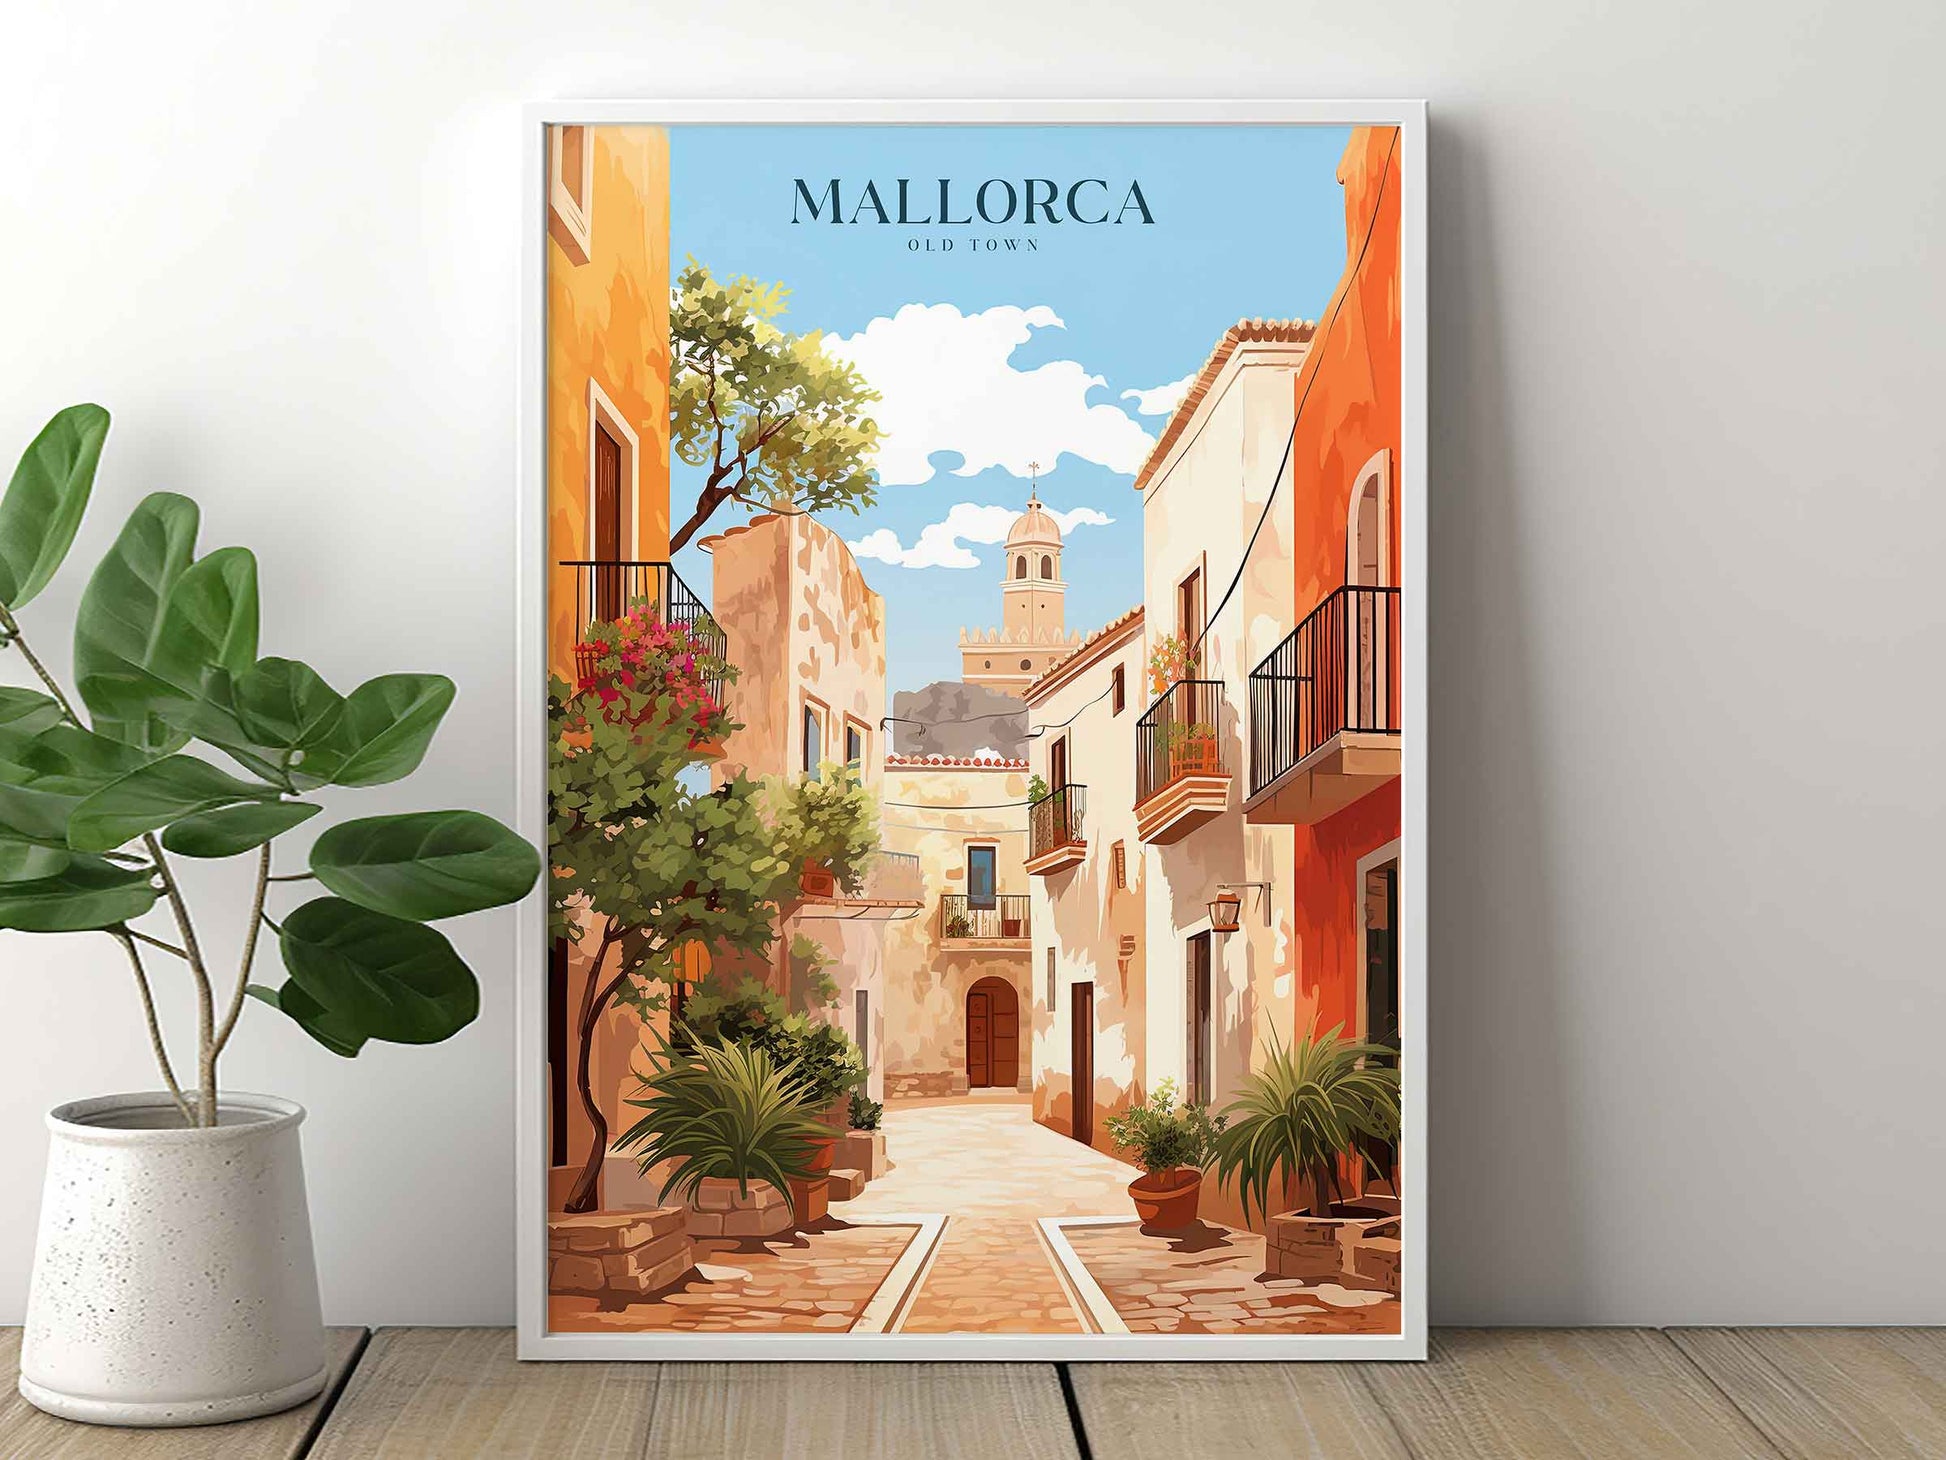 Framed Image of Mallorca Spain Travel Poster Wall Art Prints Illustration